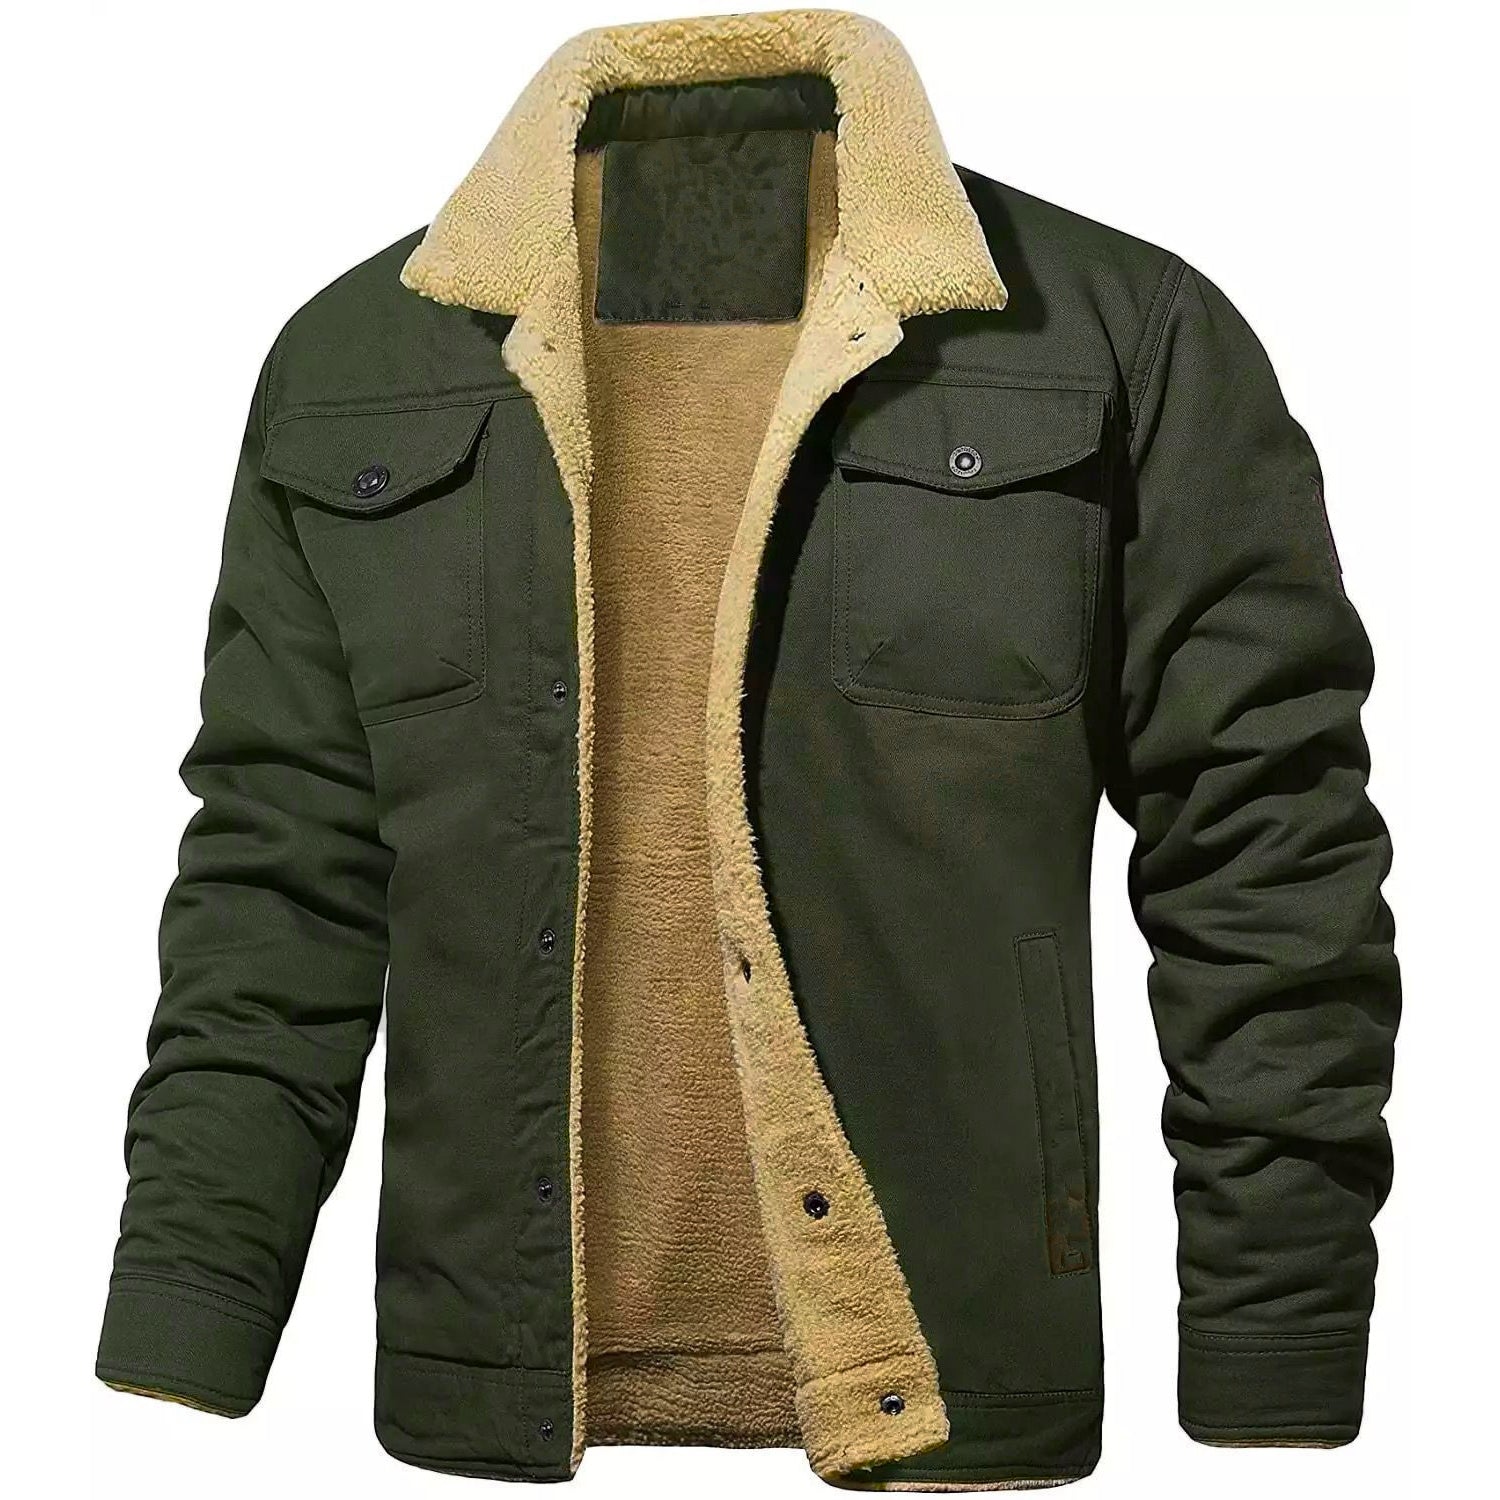 Men's Sherpa Lined Woven Cotton Jacket